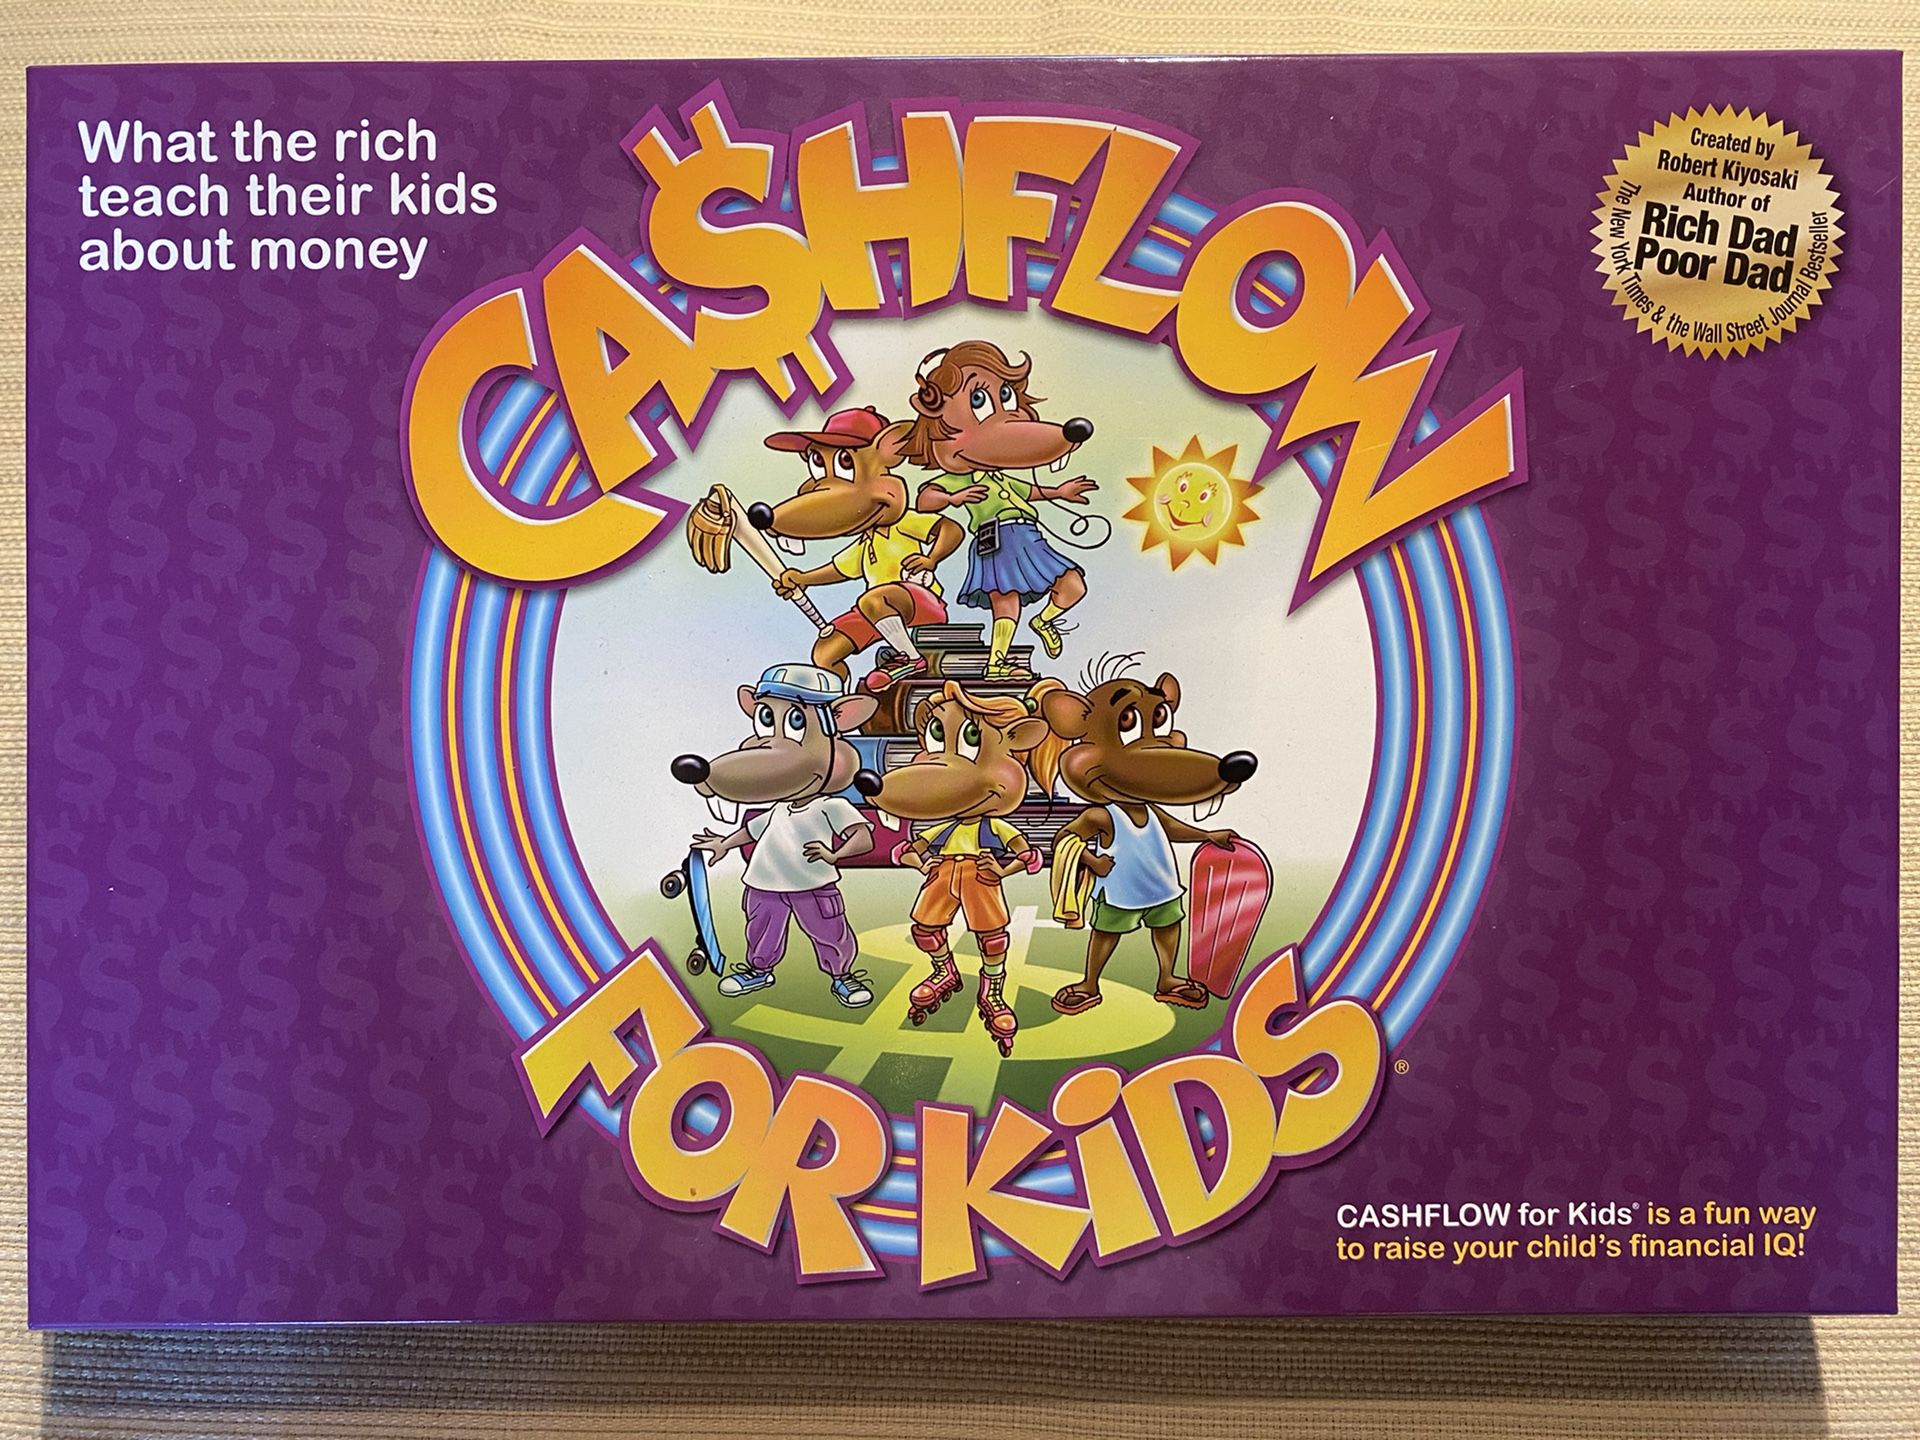 Cashflow for kids